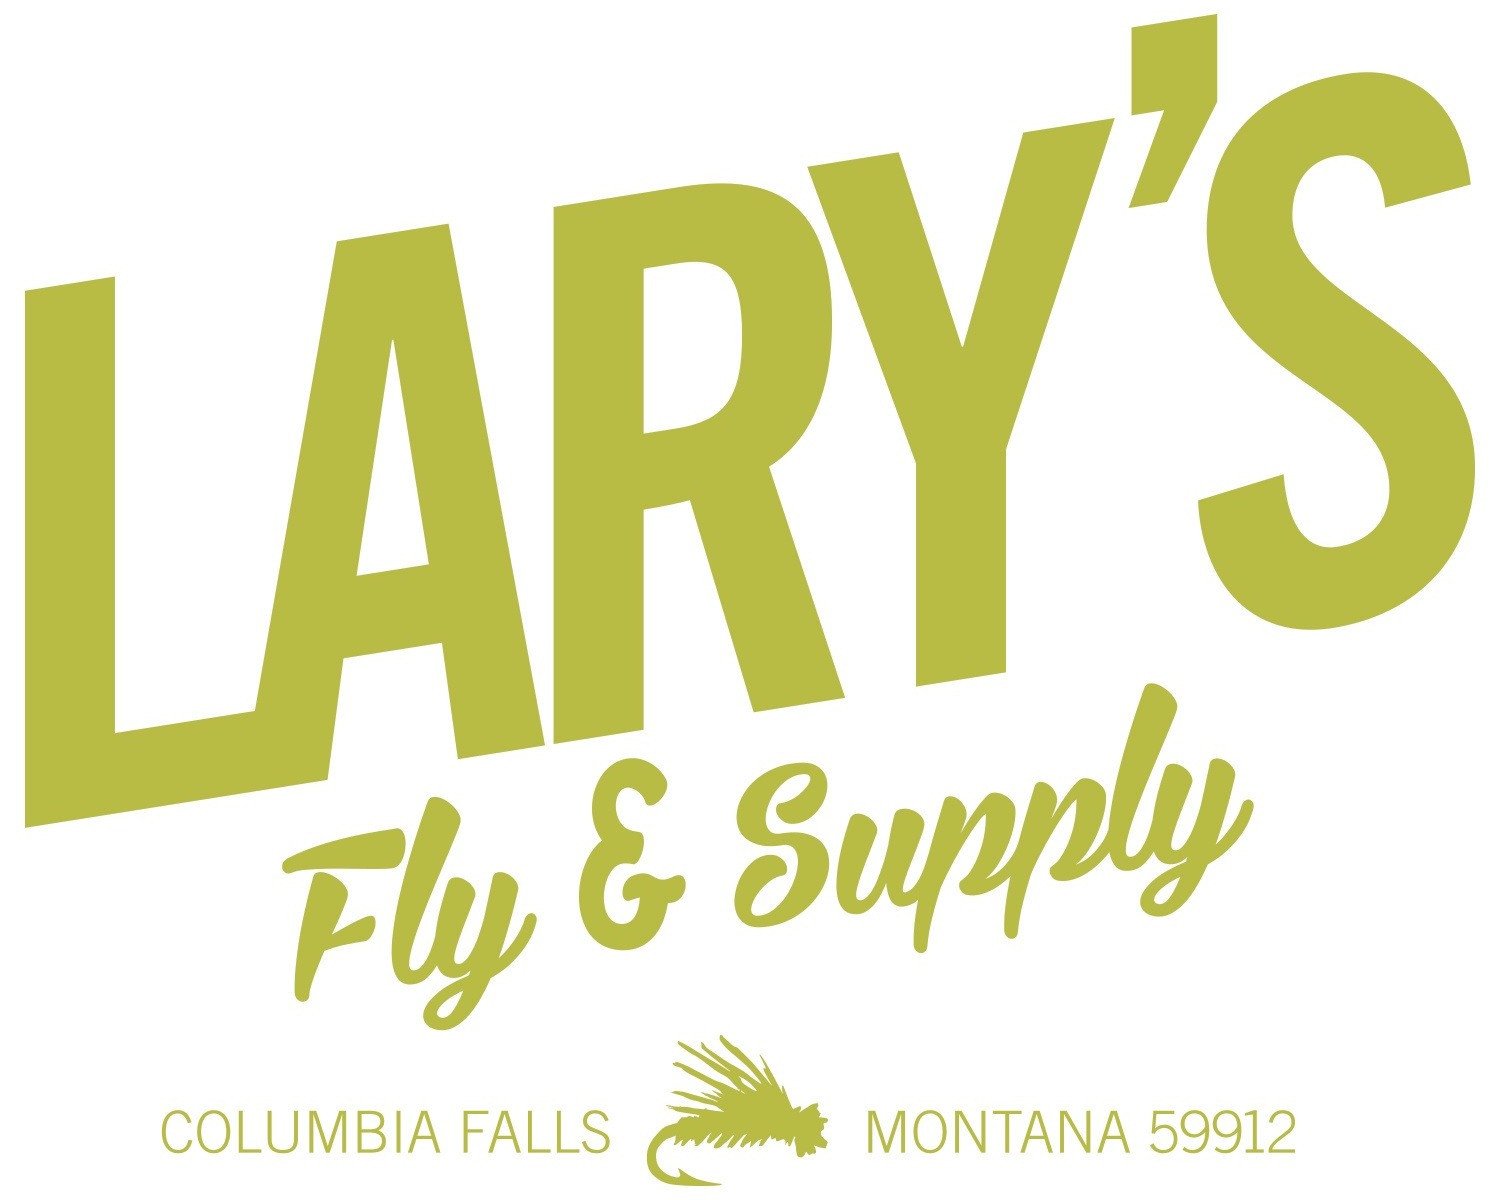 Larys logo.jpg